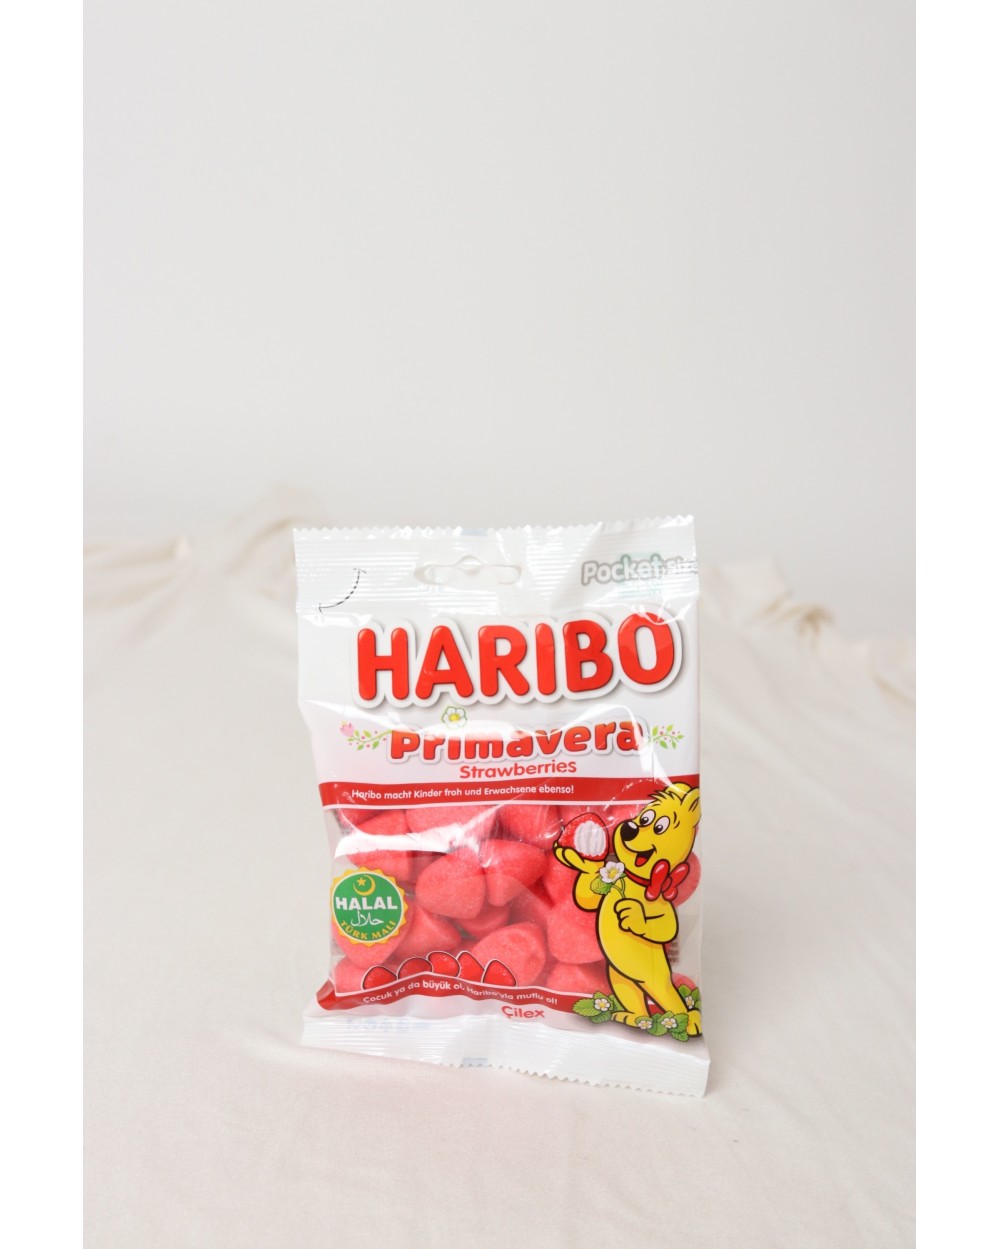 Haribo Tagada Halal Candy